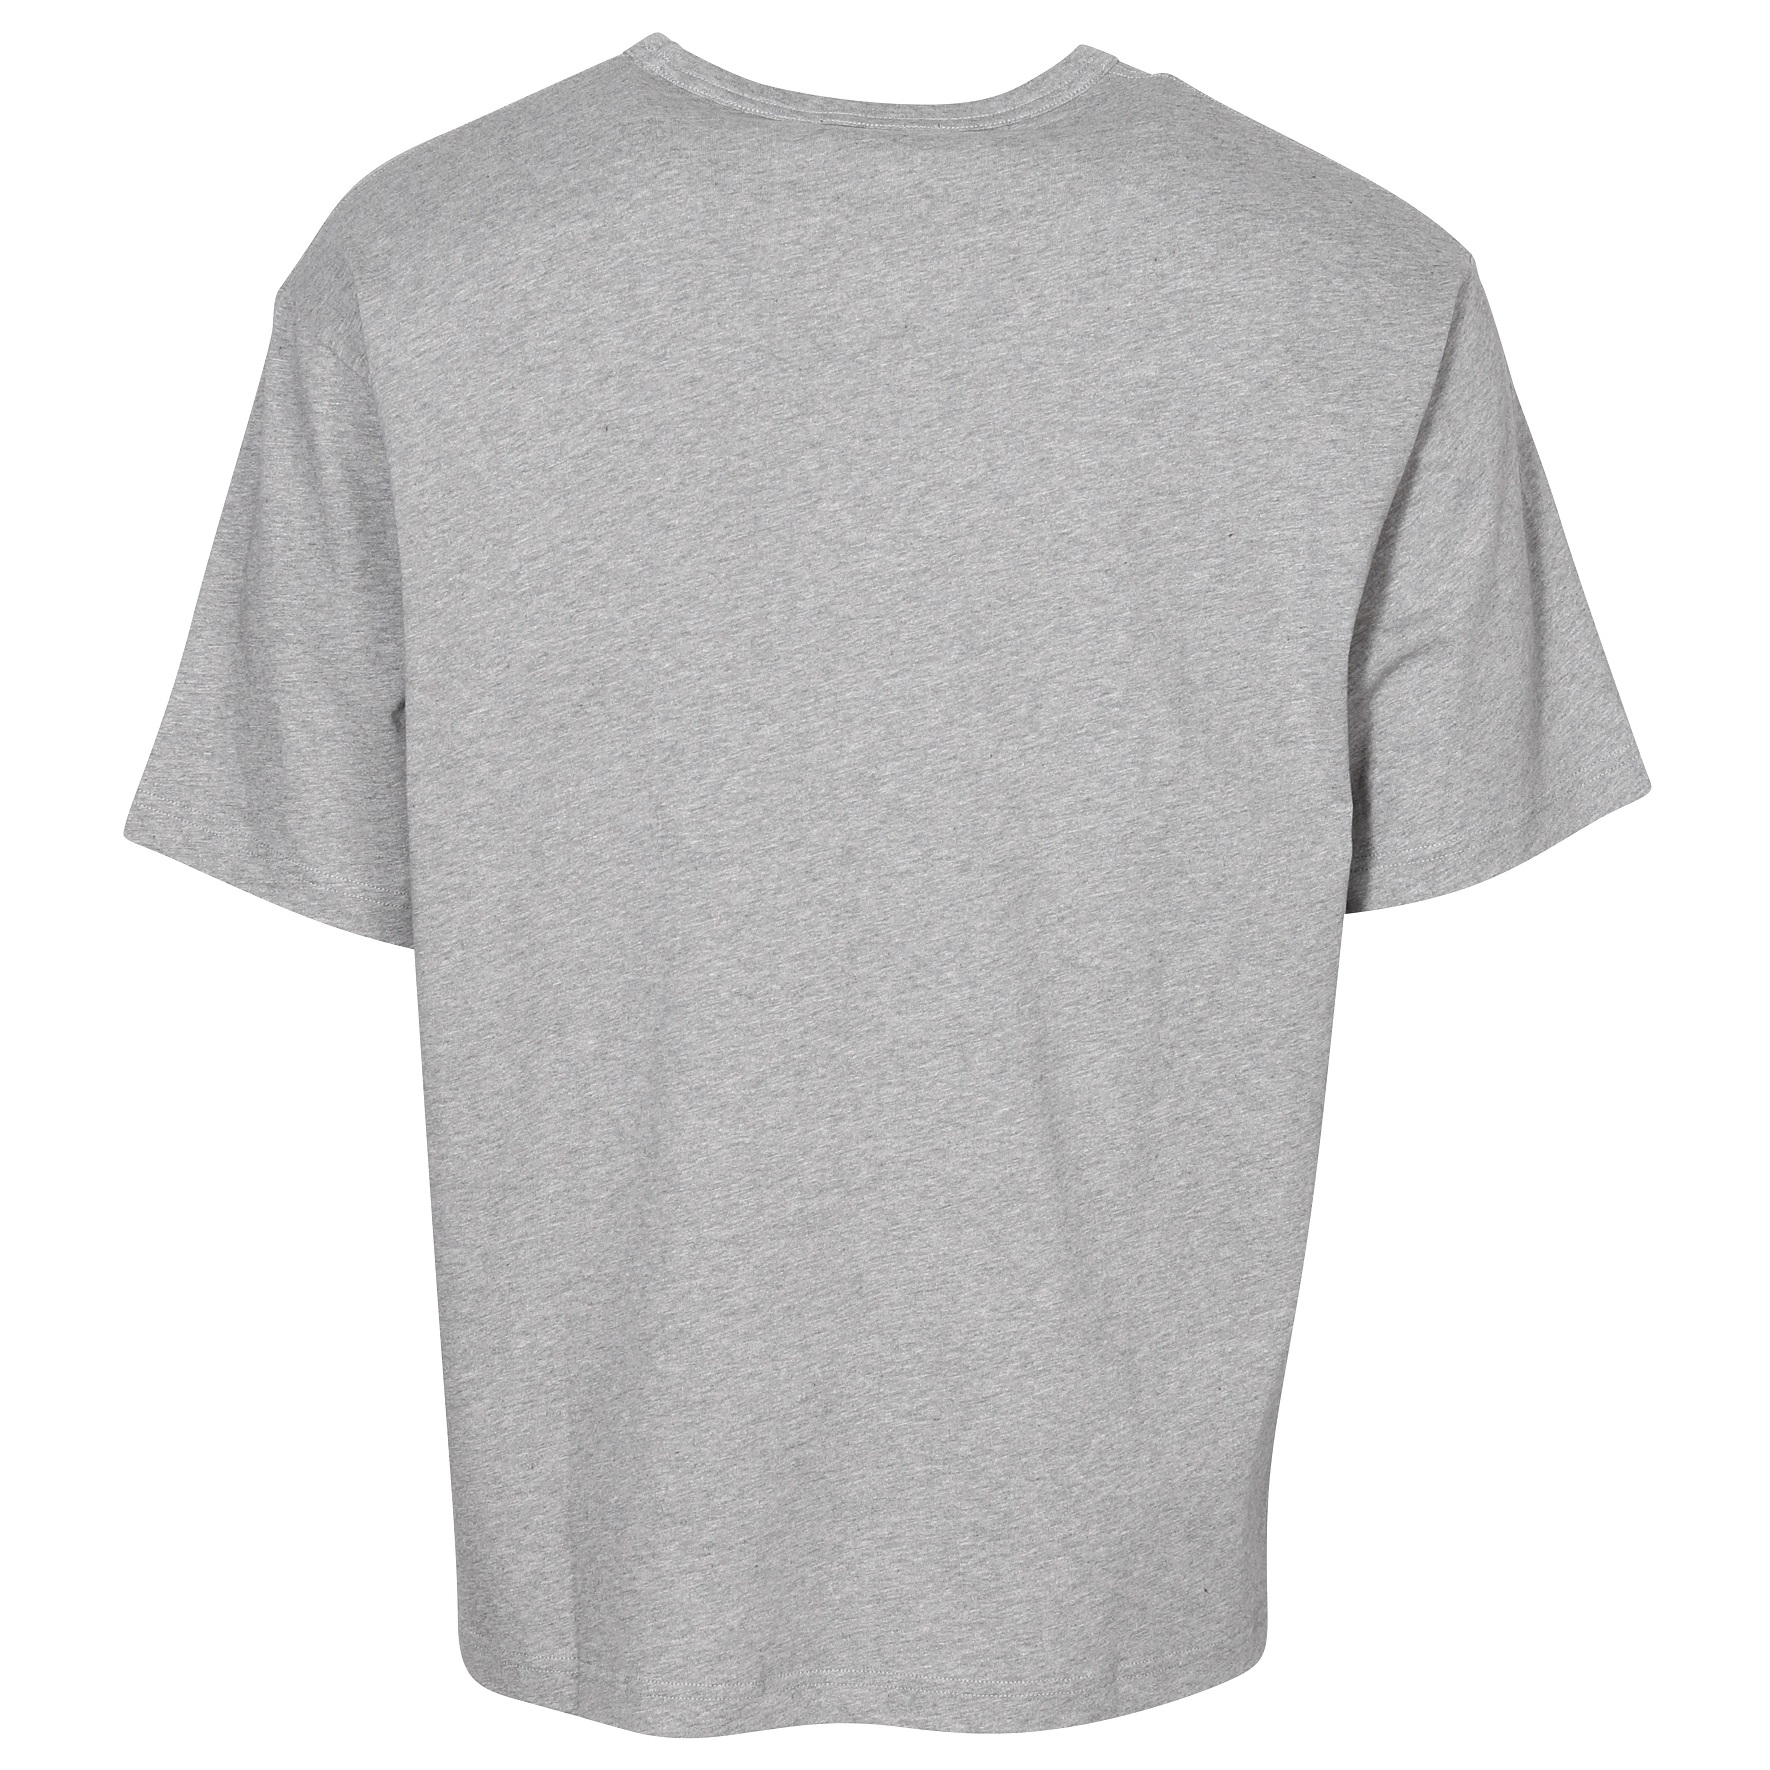 ACNE STUDIOS Unisex Oversize Face T-Shirt in Light Grey Melange L